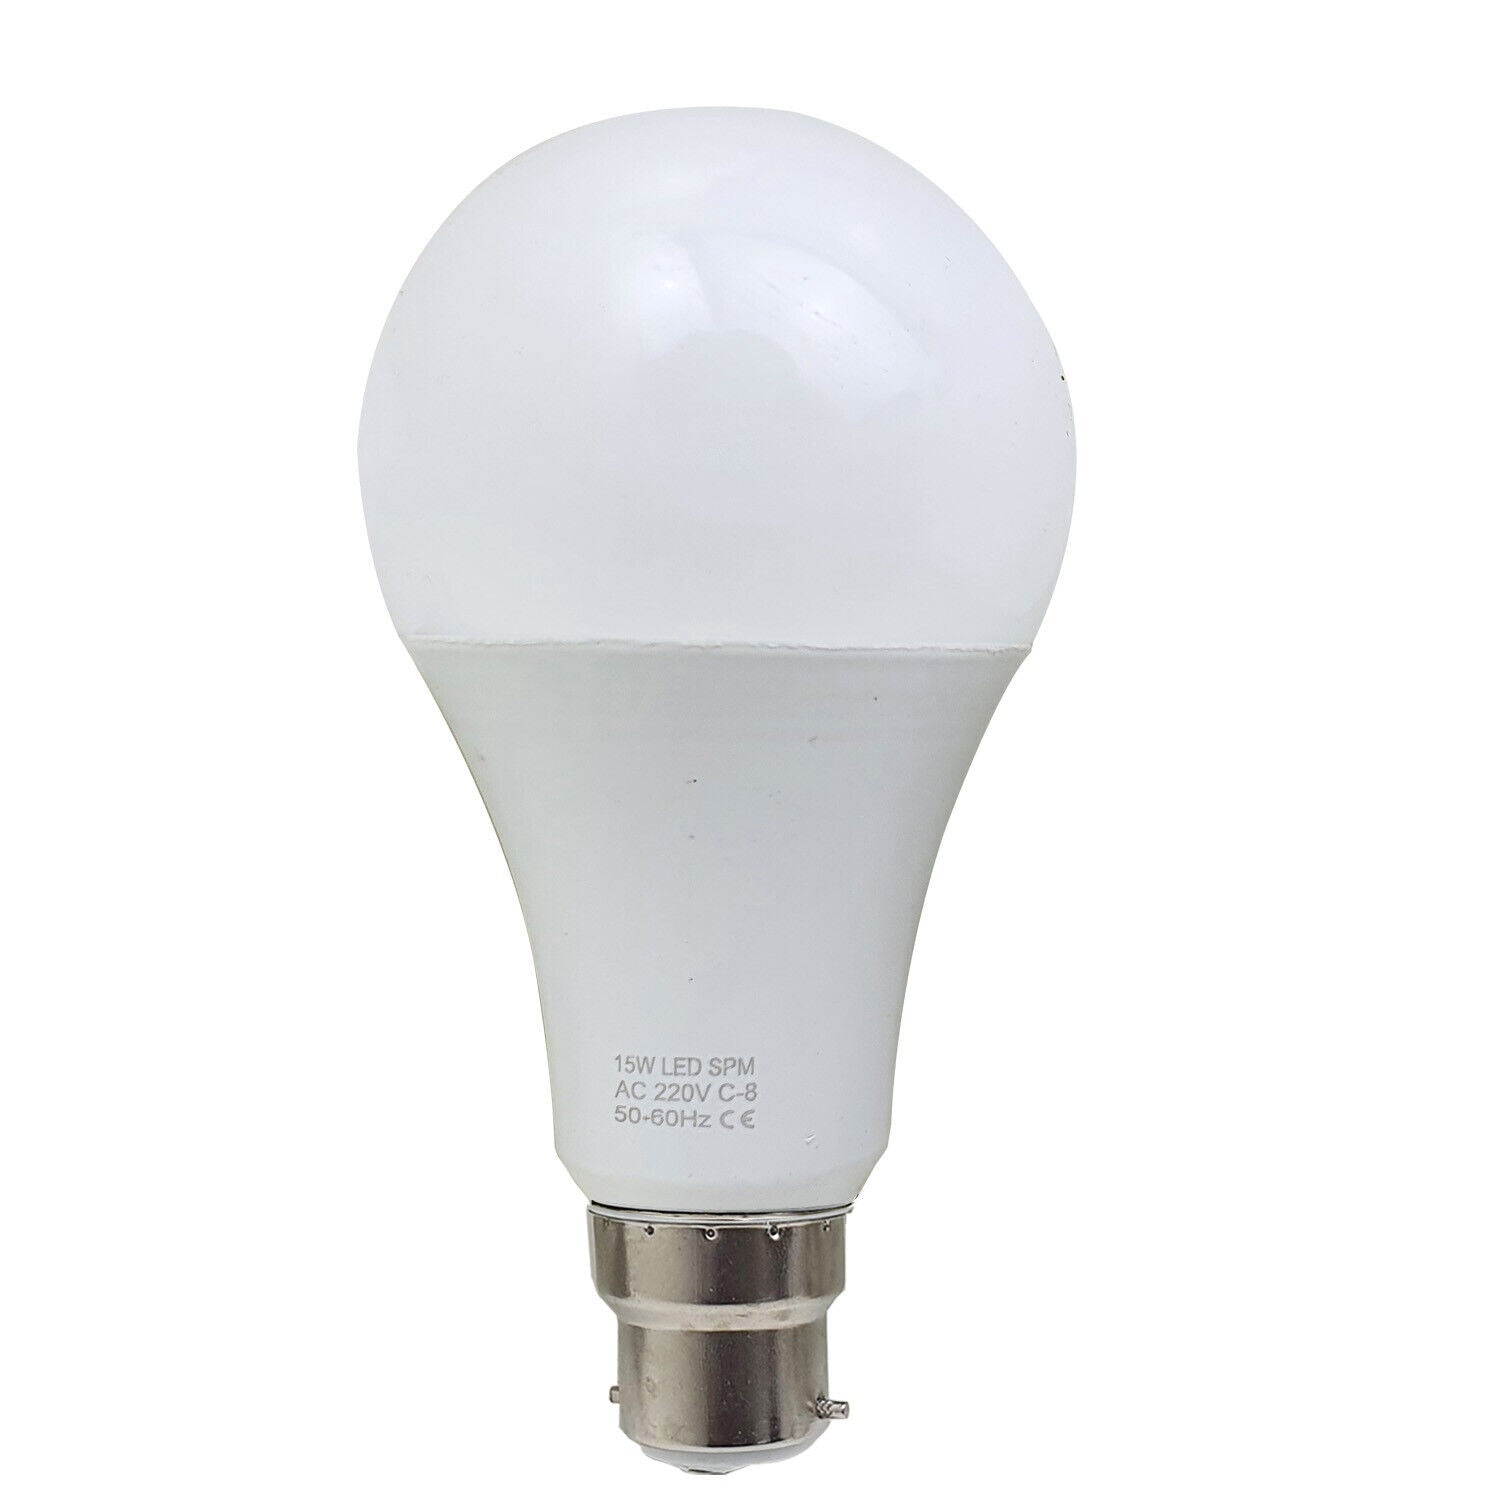 B22 15W Energy Saving Warm White LED Light Bulbs A60 B22 Screw-in non dimmable bulbs